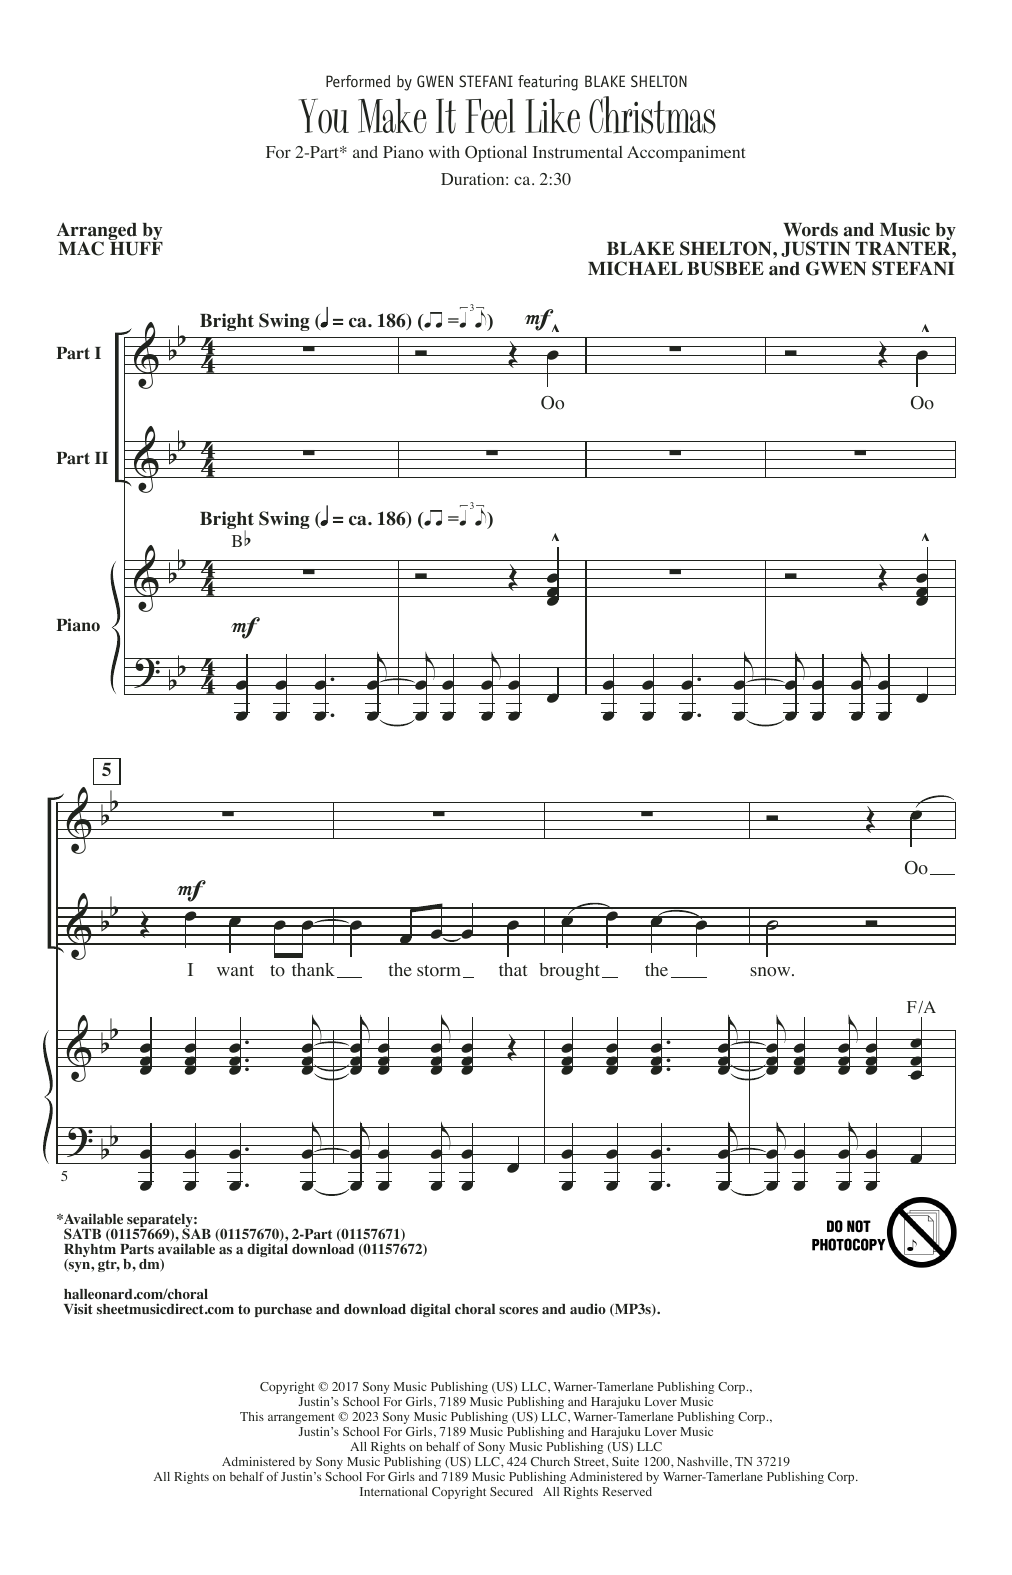 Gwen Stefani featuring Blake Shelton You Make It Feel Like Christmas (arr. Mac Huff) Sheet Music Notes & Chords for SAB Choir - Download or Print PDF